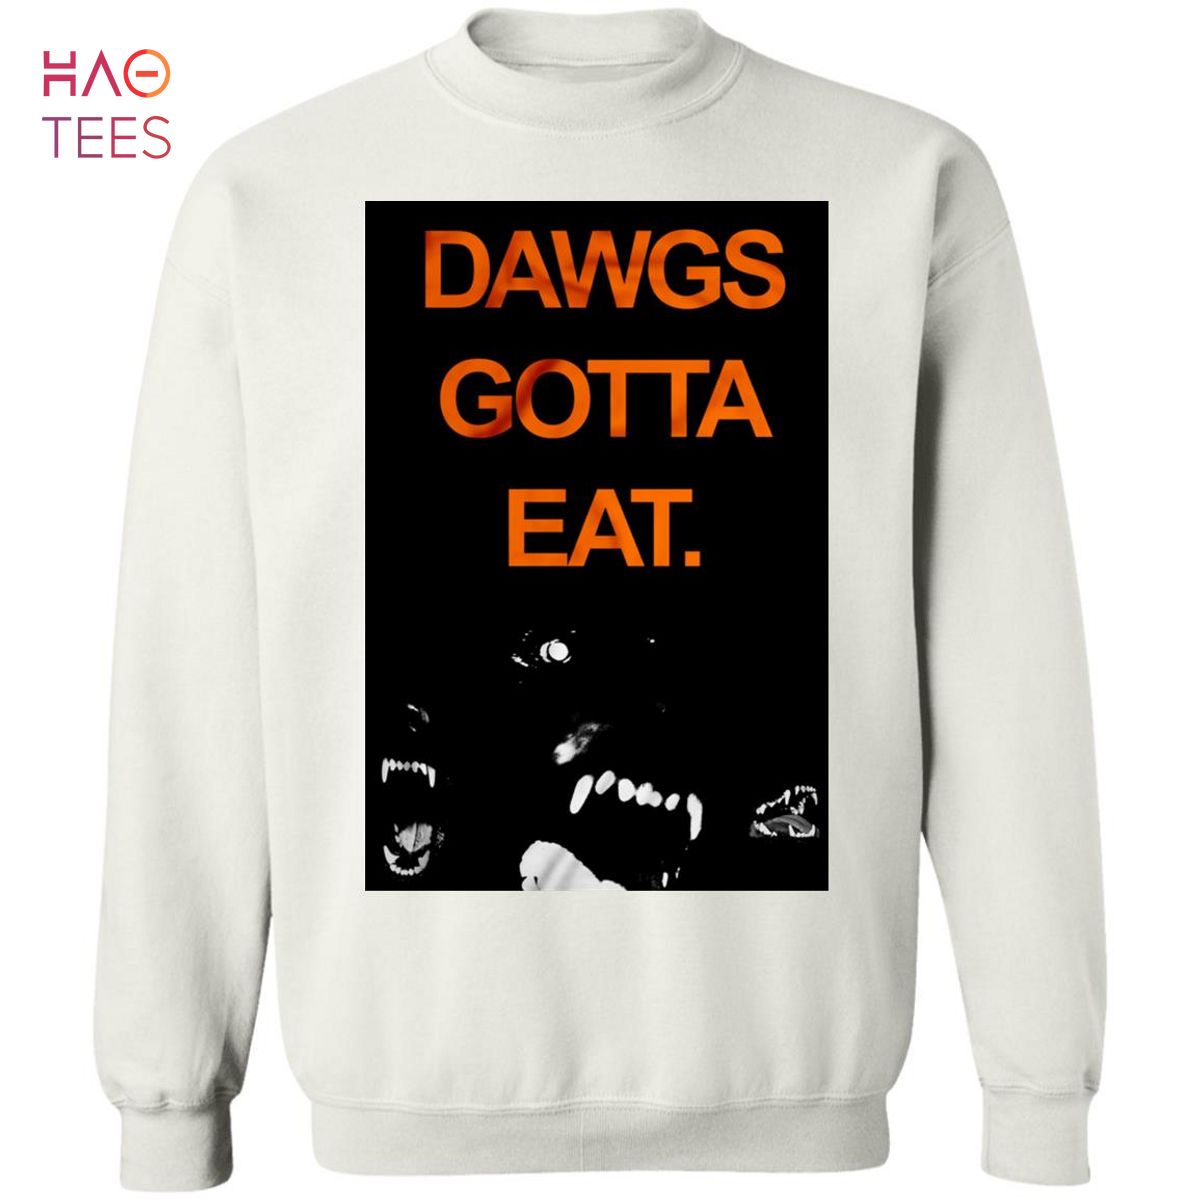 HOT Dawgs Gotta Eat Sweater